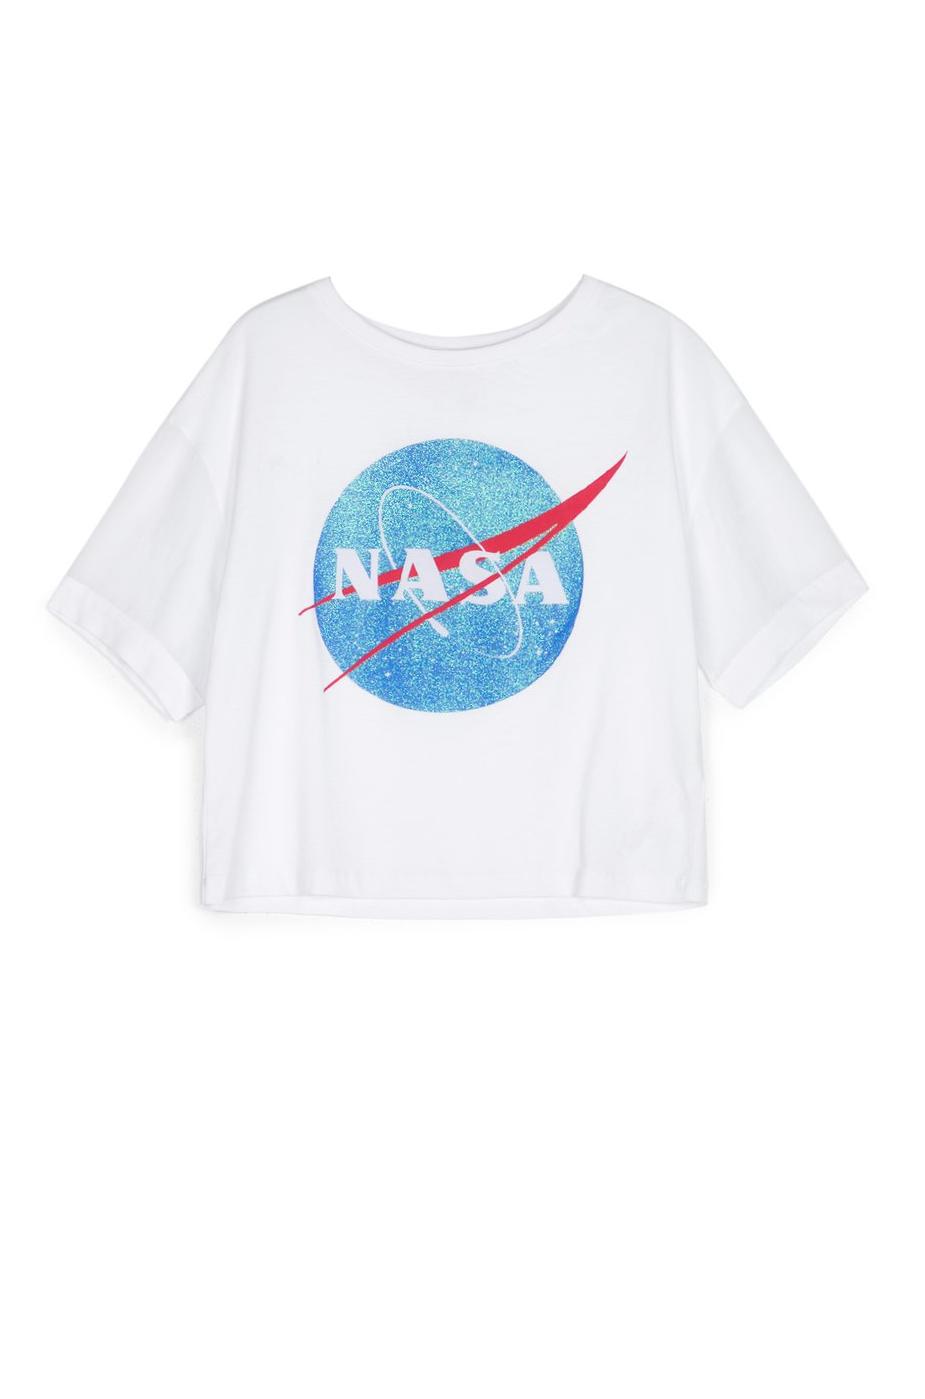 T-shirt NASA com mangas de organza, Stradivarius, €12,95